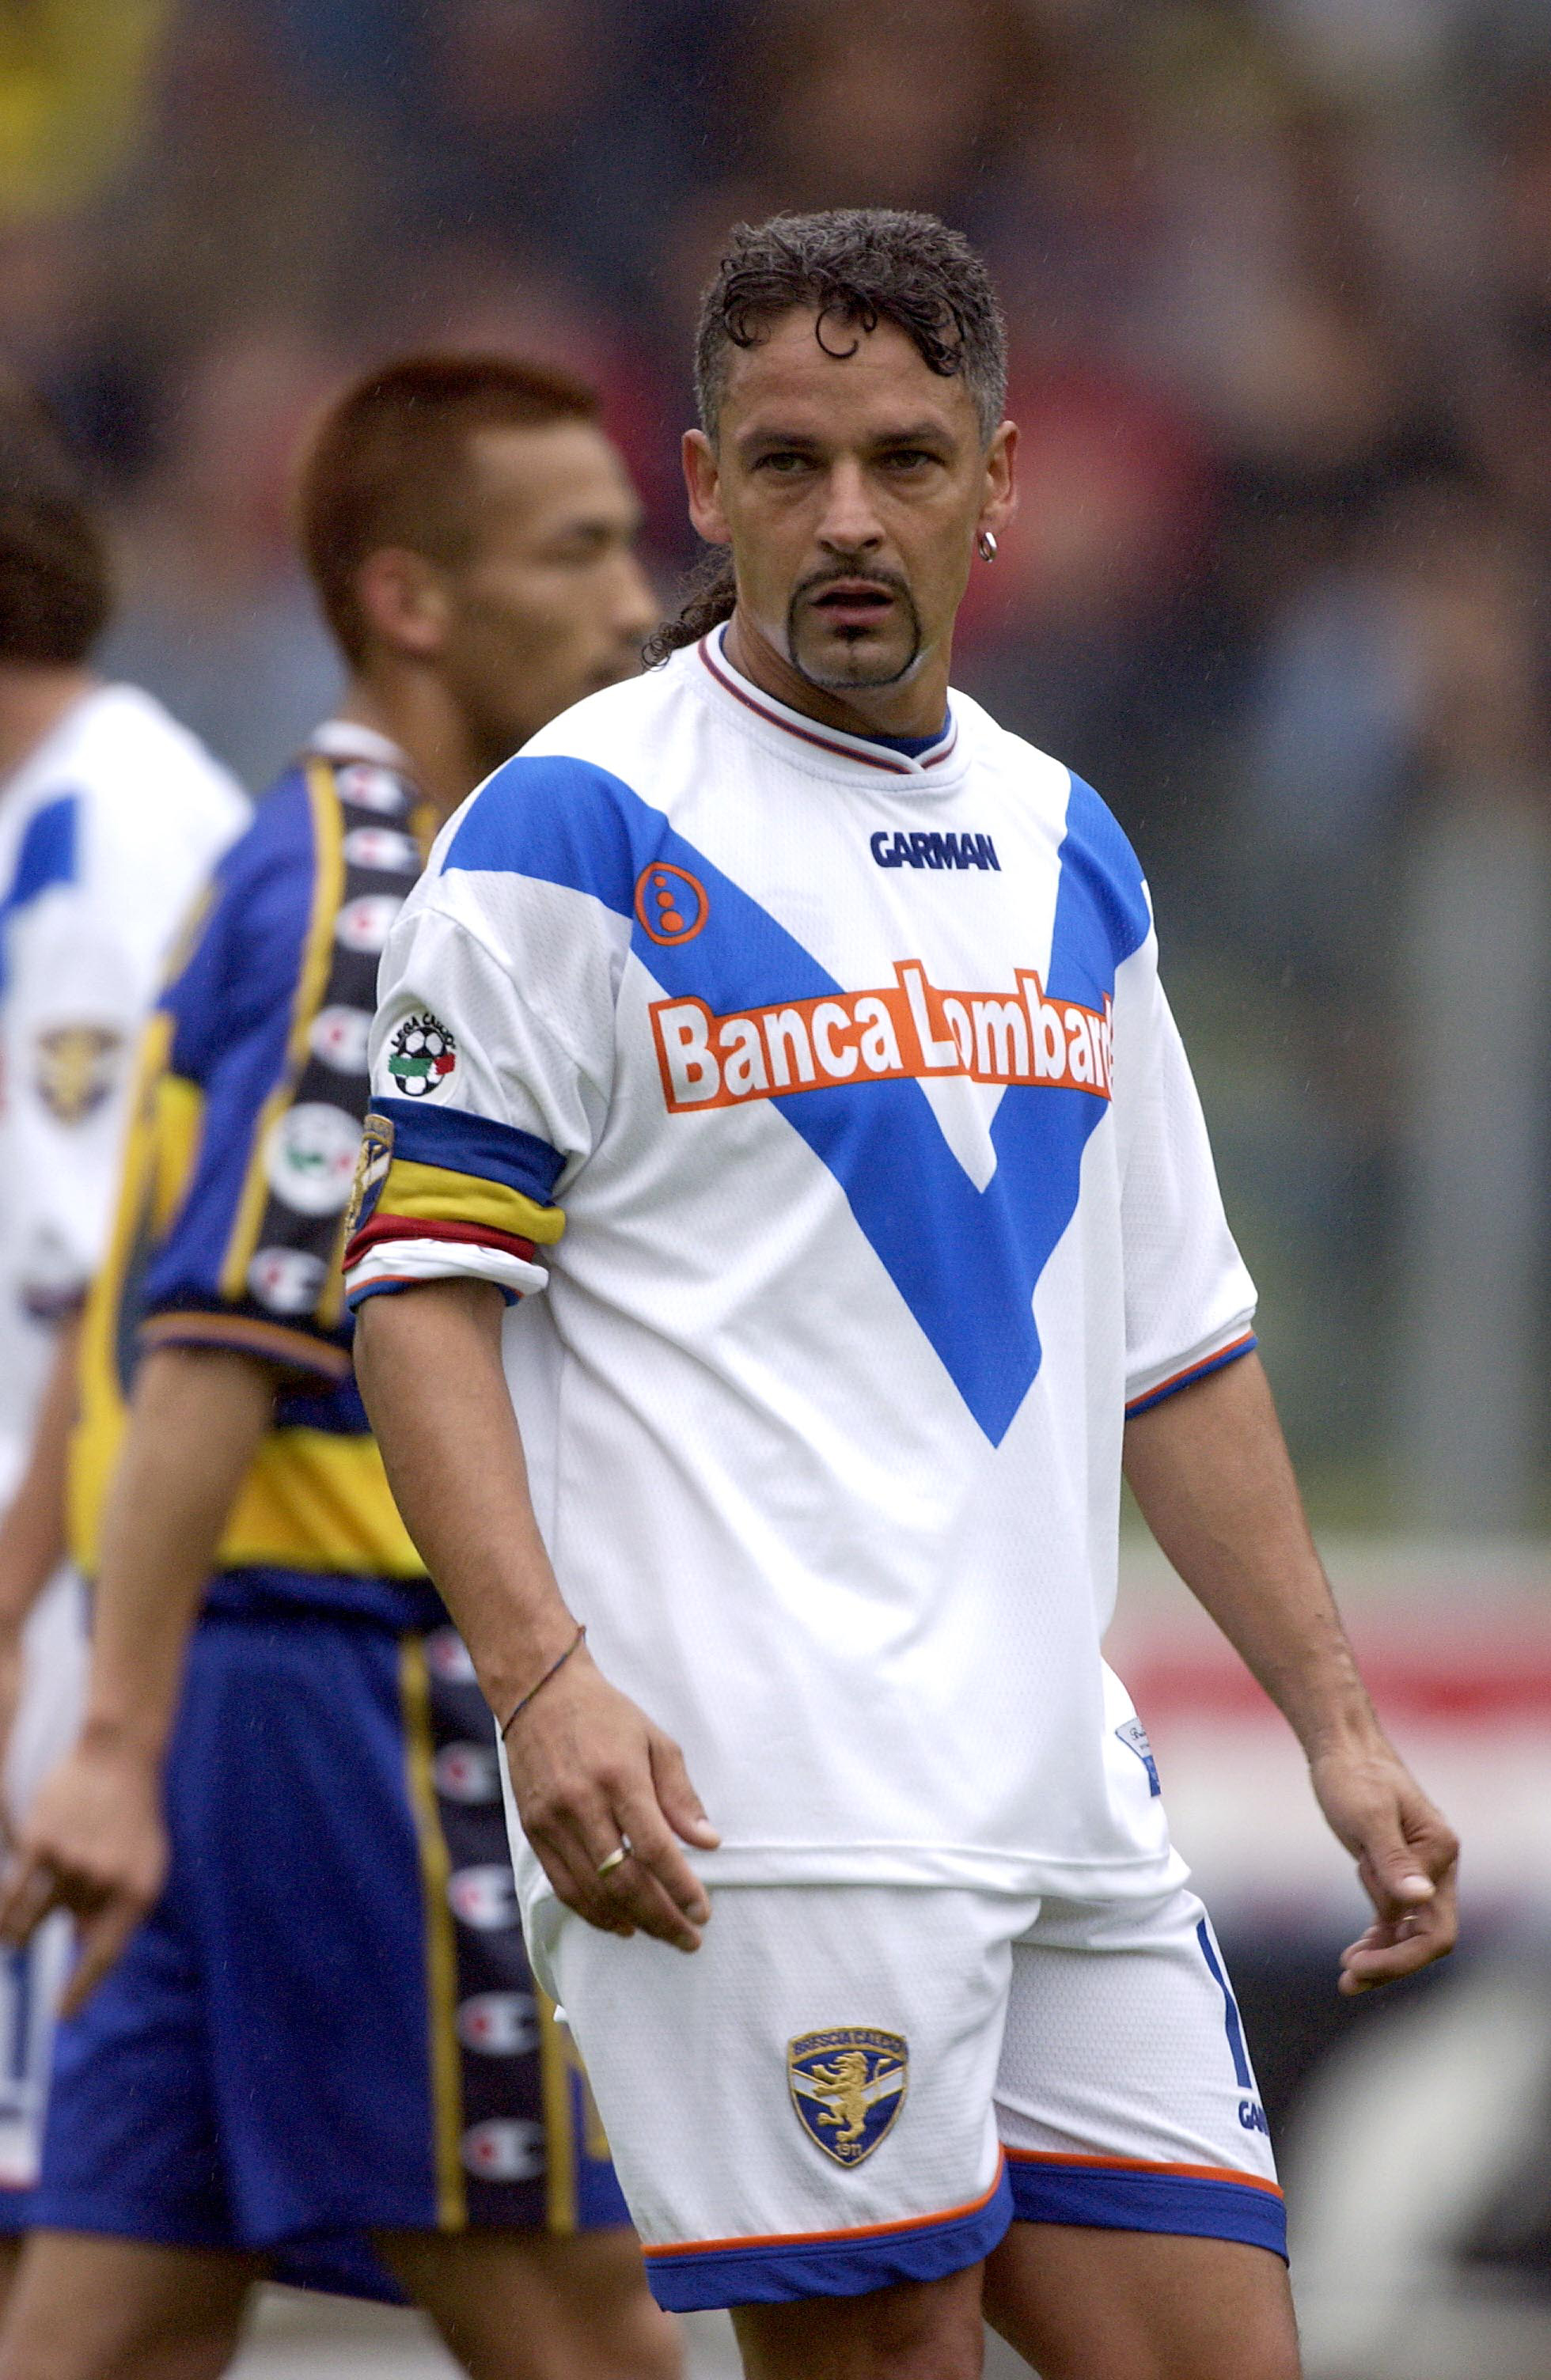 23 Sep 2001: Roberto Baggio of Brescia in action during the Serie A 4th Round League match between Parma and Brescia, played at the Ennio Tardini stadium, Parma.   DIGITAL IMAGE. Mandatory Credit: Grazia Neri/ALLSPORT